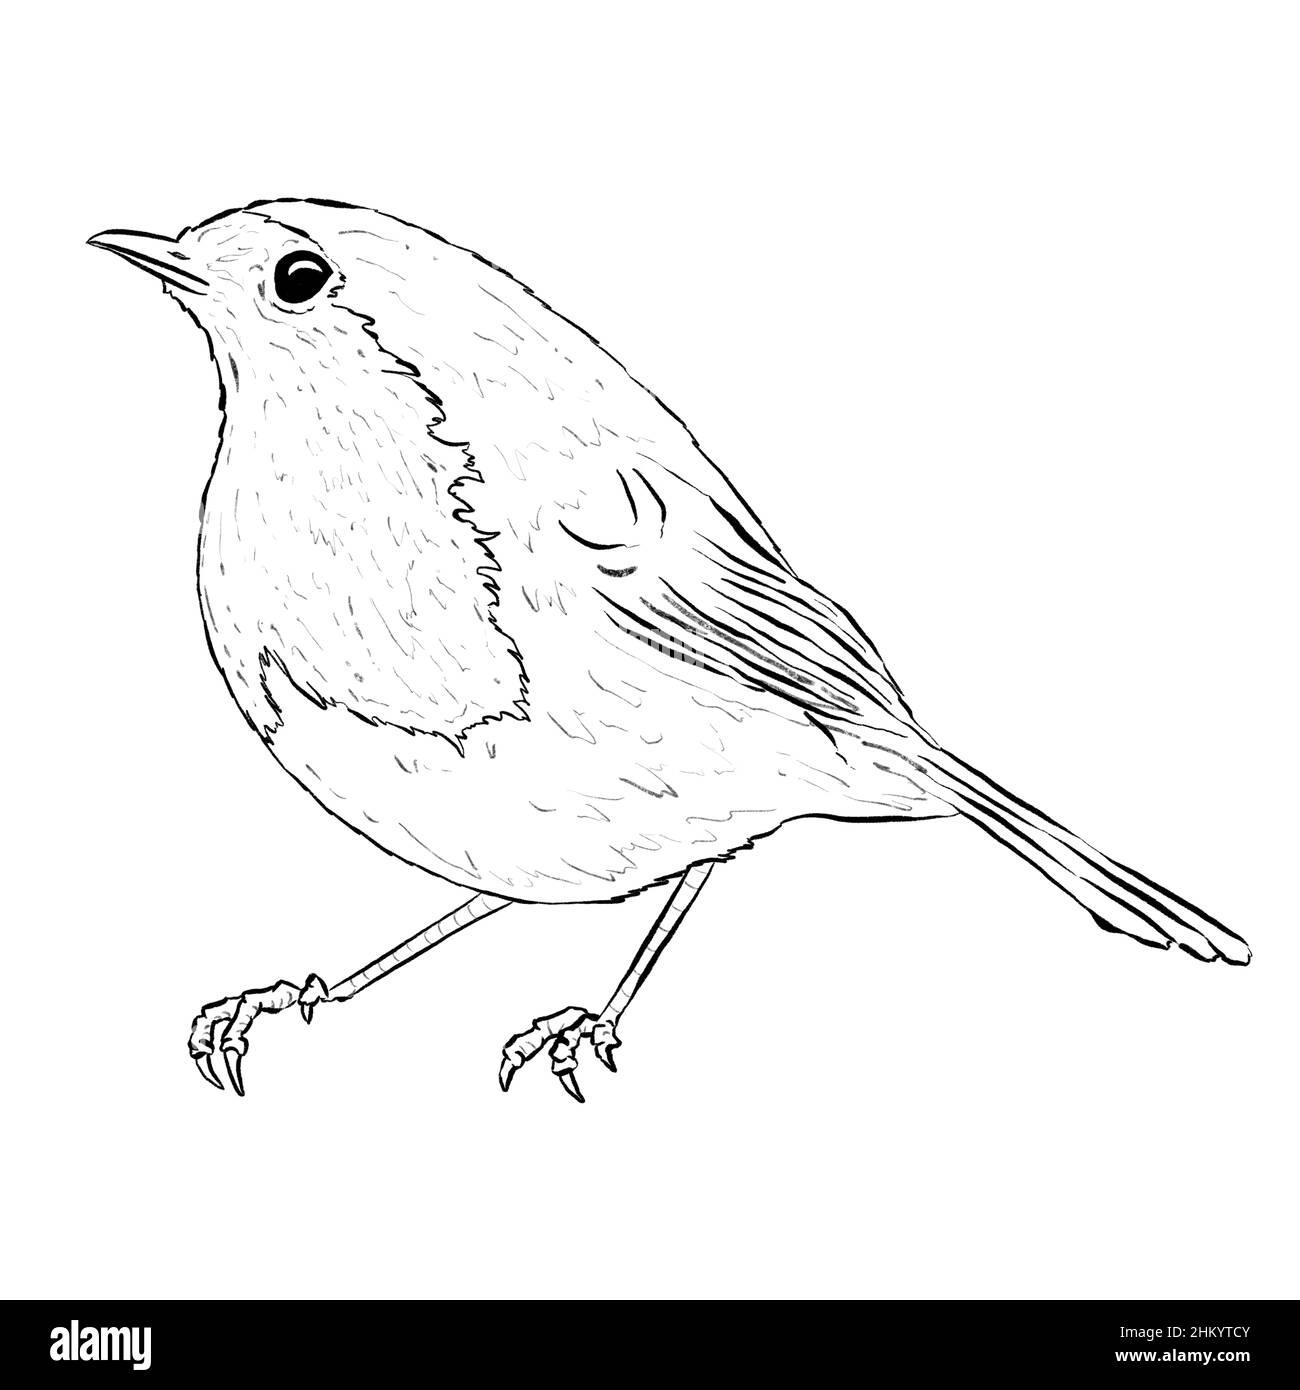 Robin Bird Line Art Logo that is Pencil Drawn on White Background Stock ...